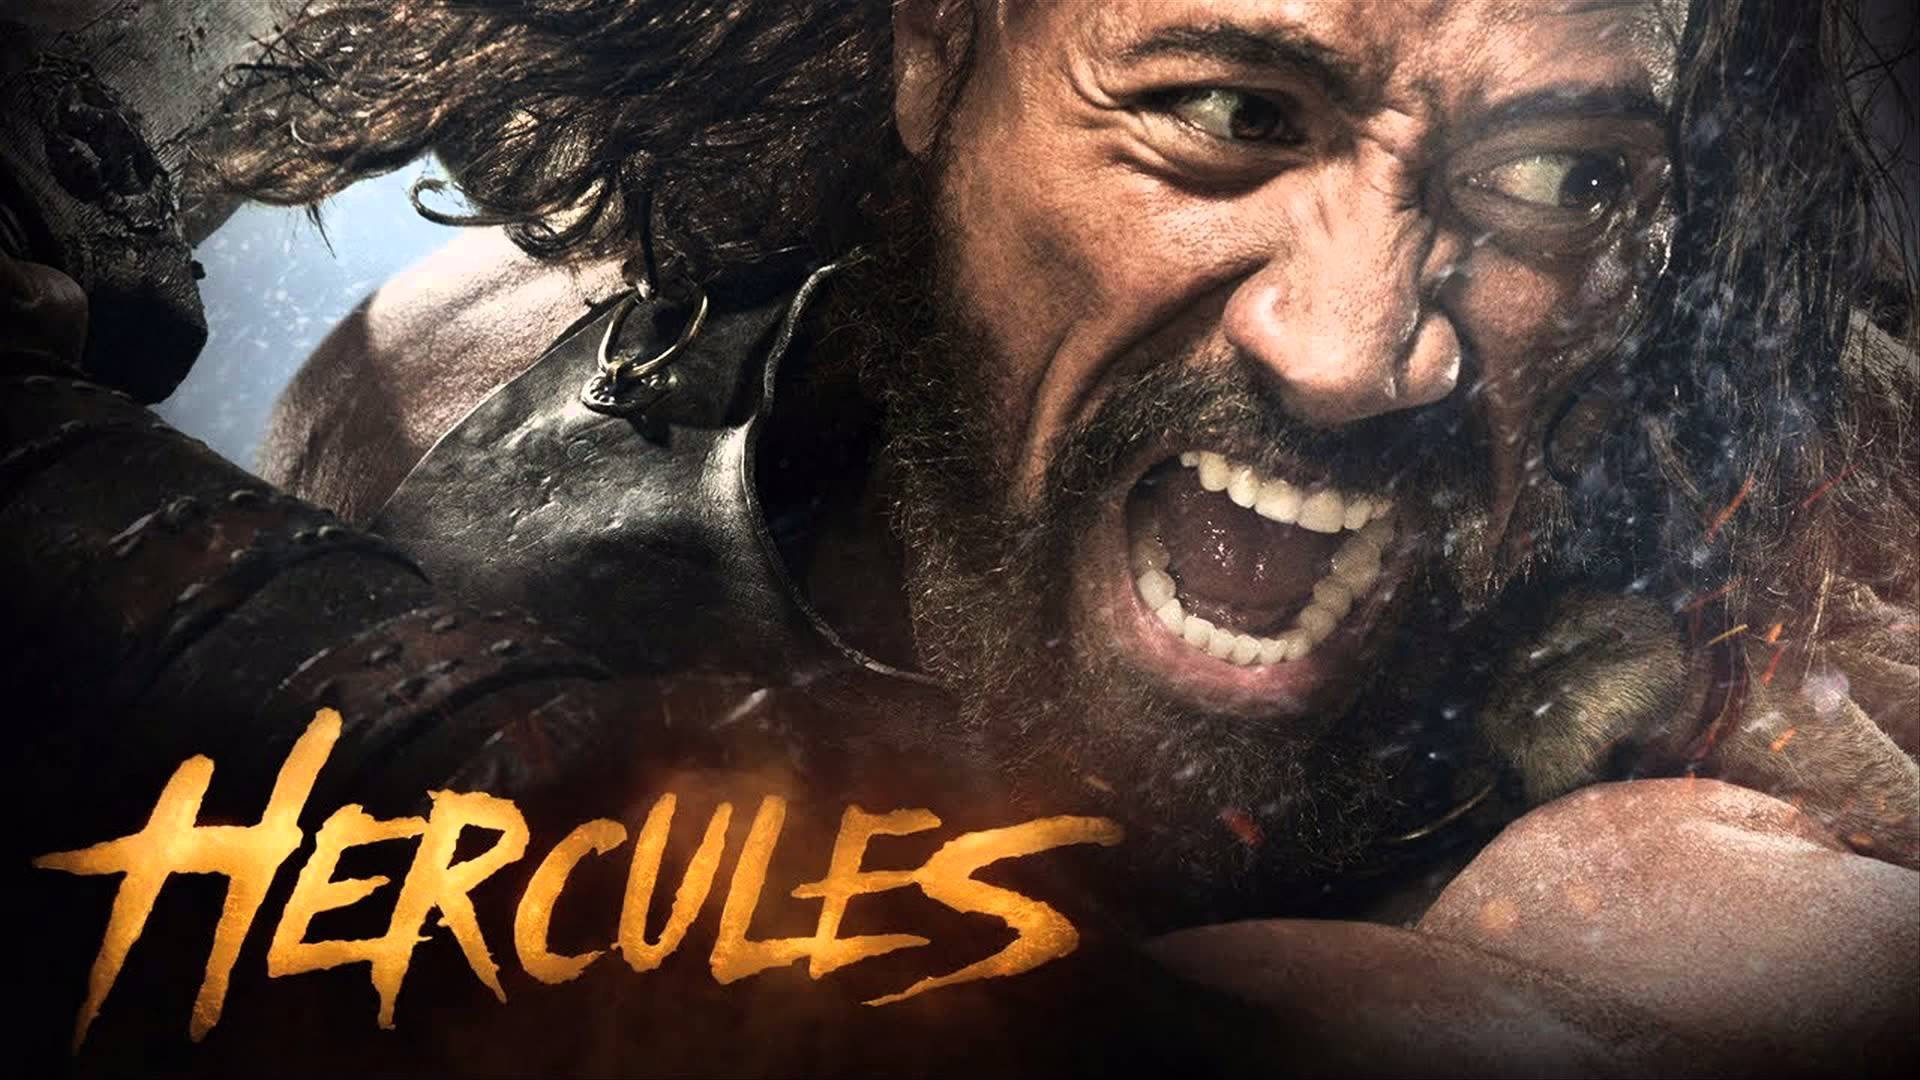 Hercules Background